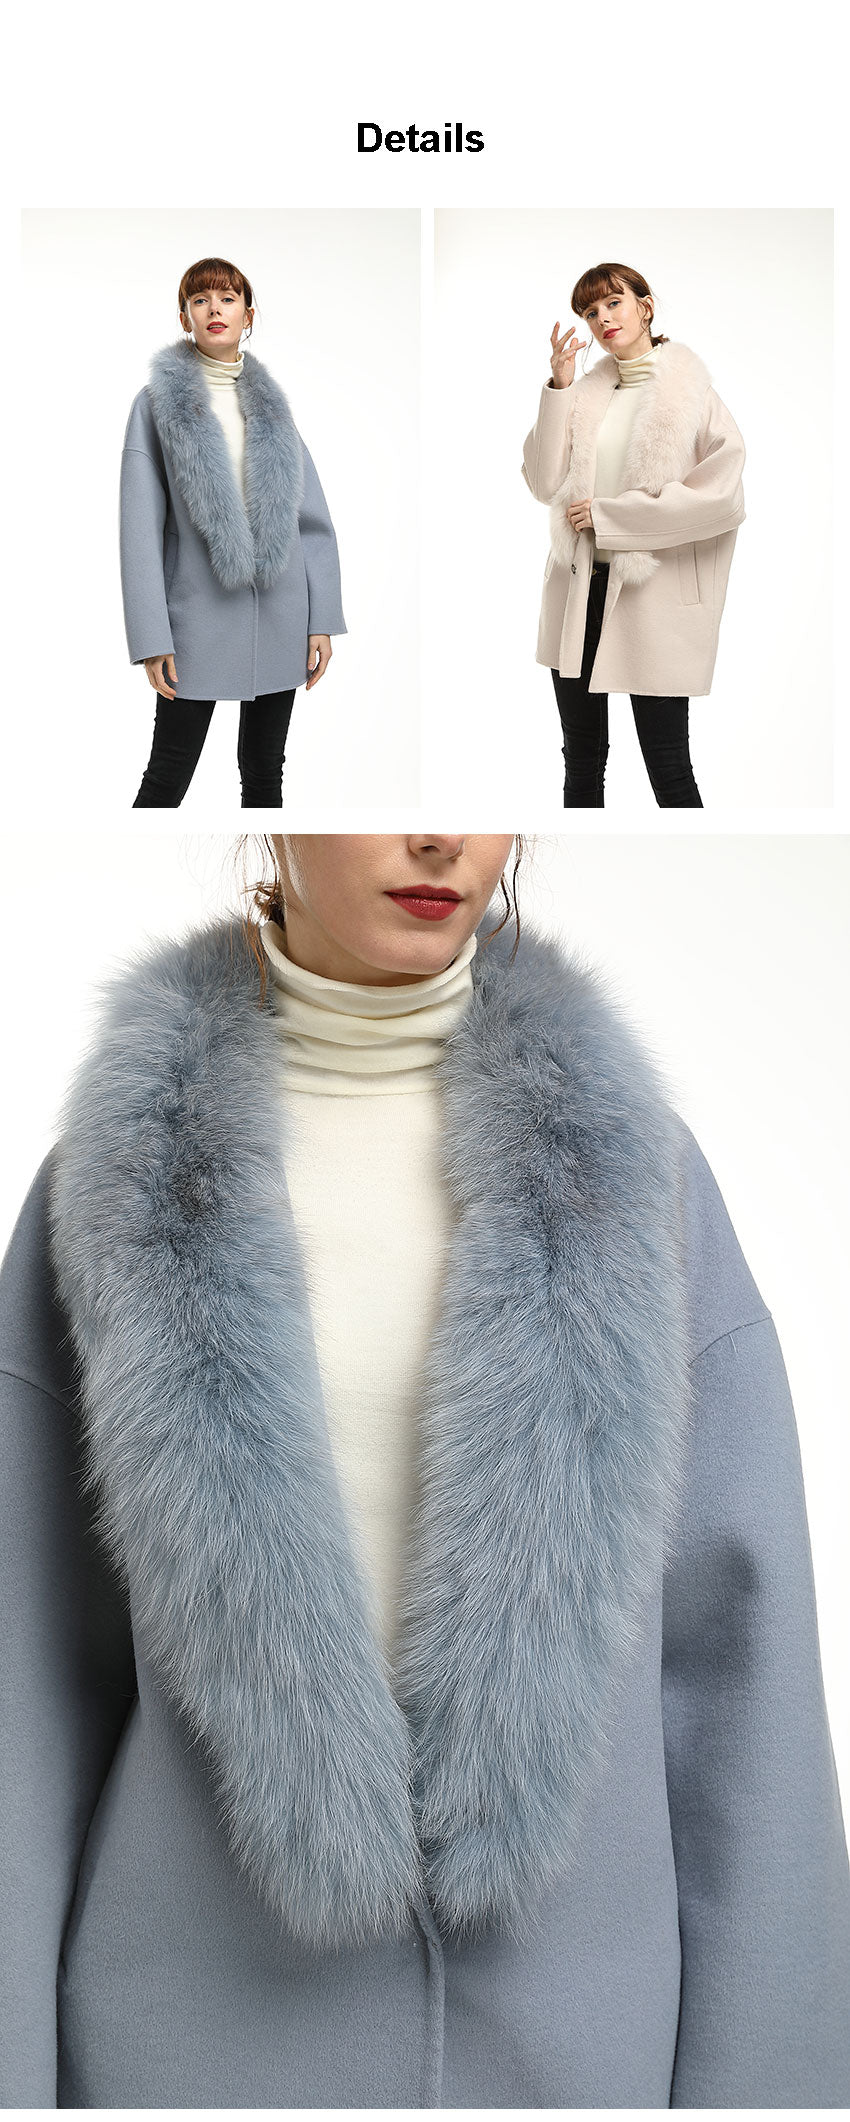 New Large Collar Long Silhouette Woolen Coat